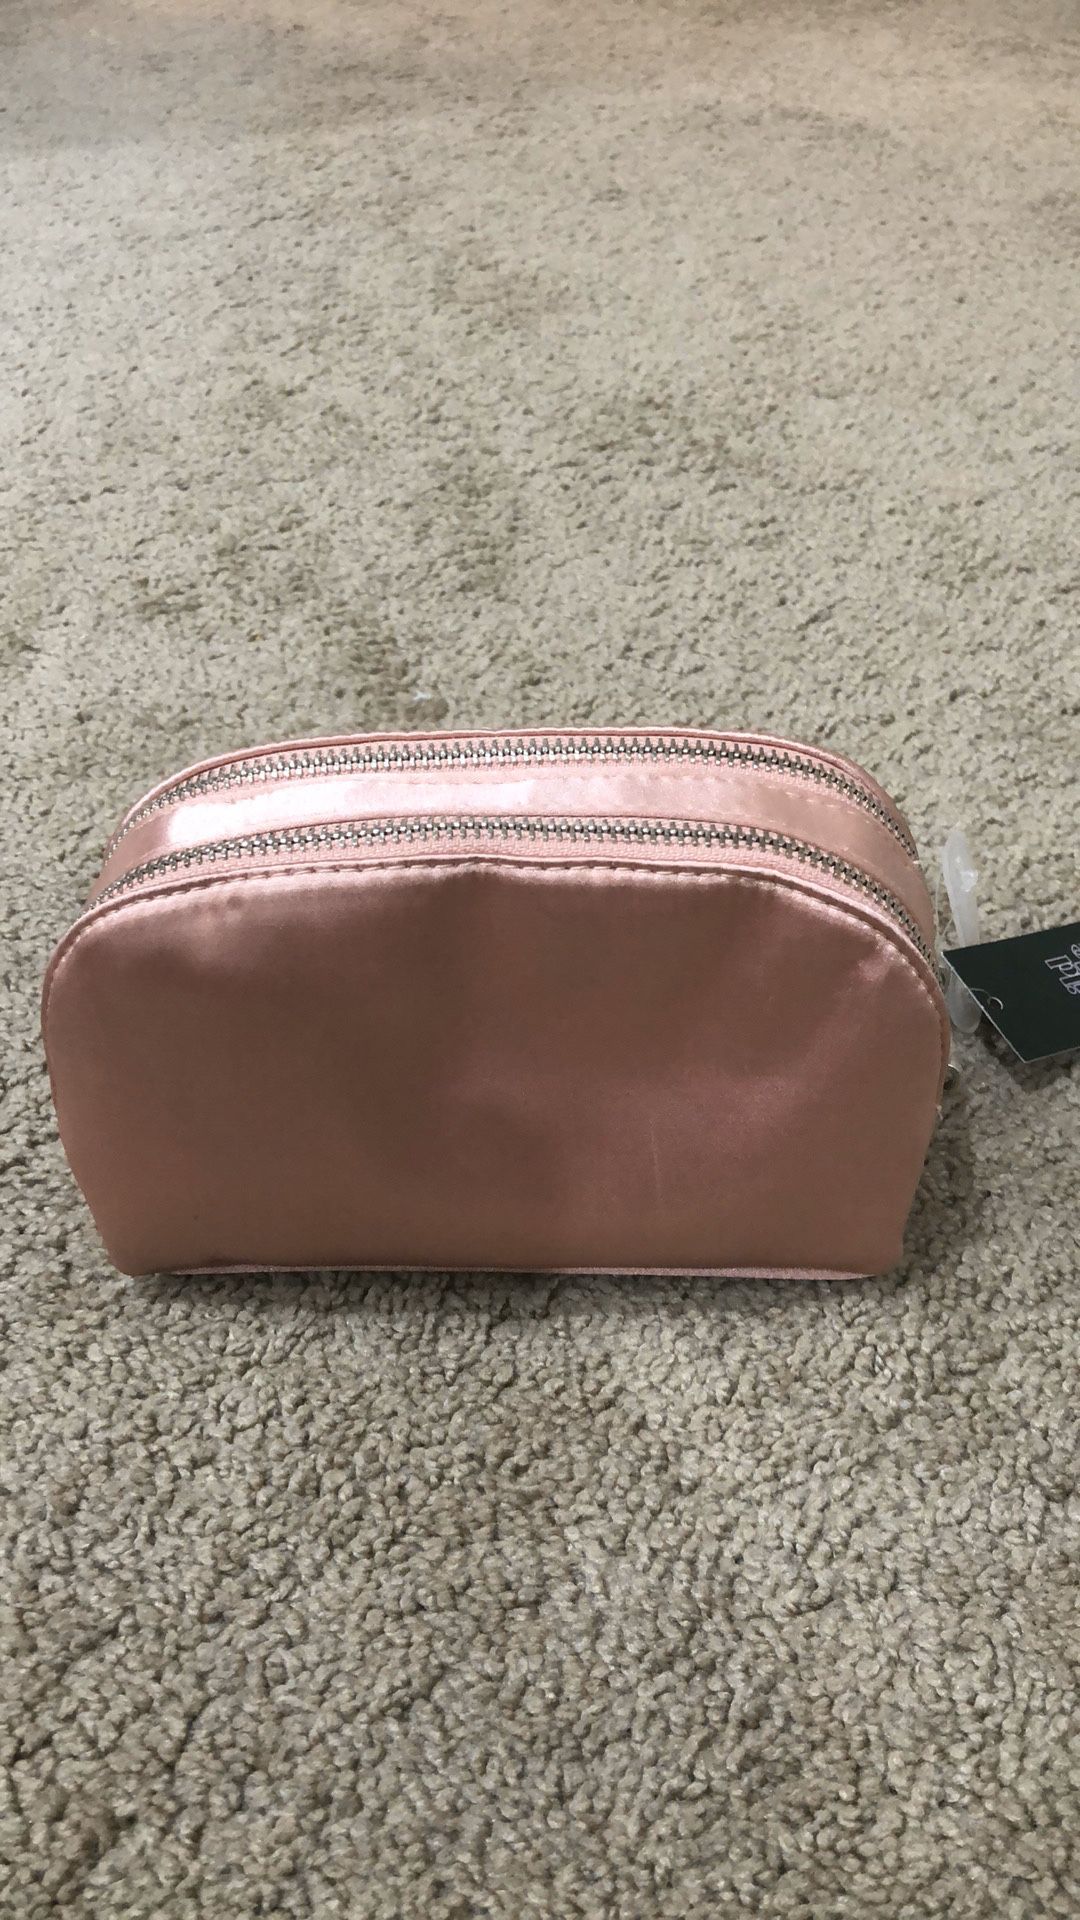 New Cosmetic Bag